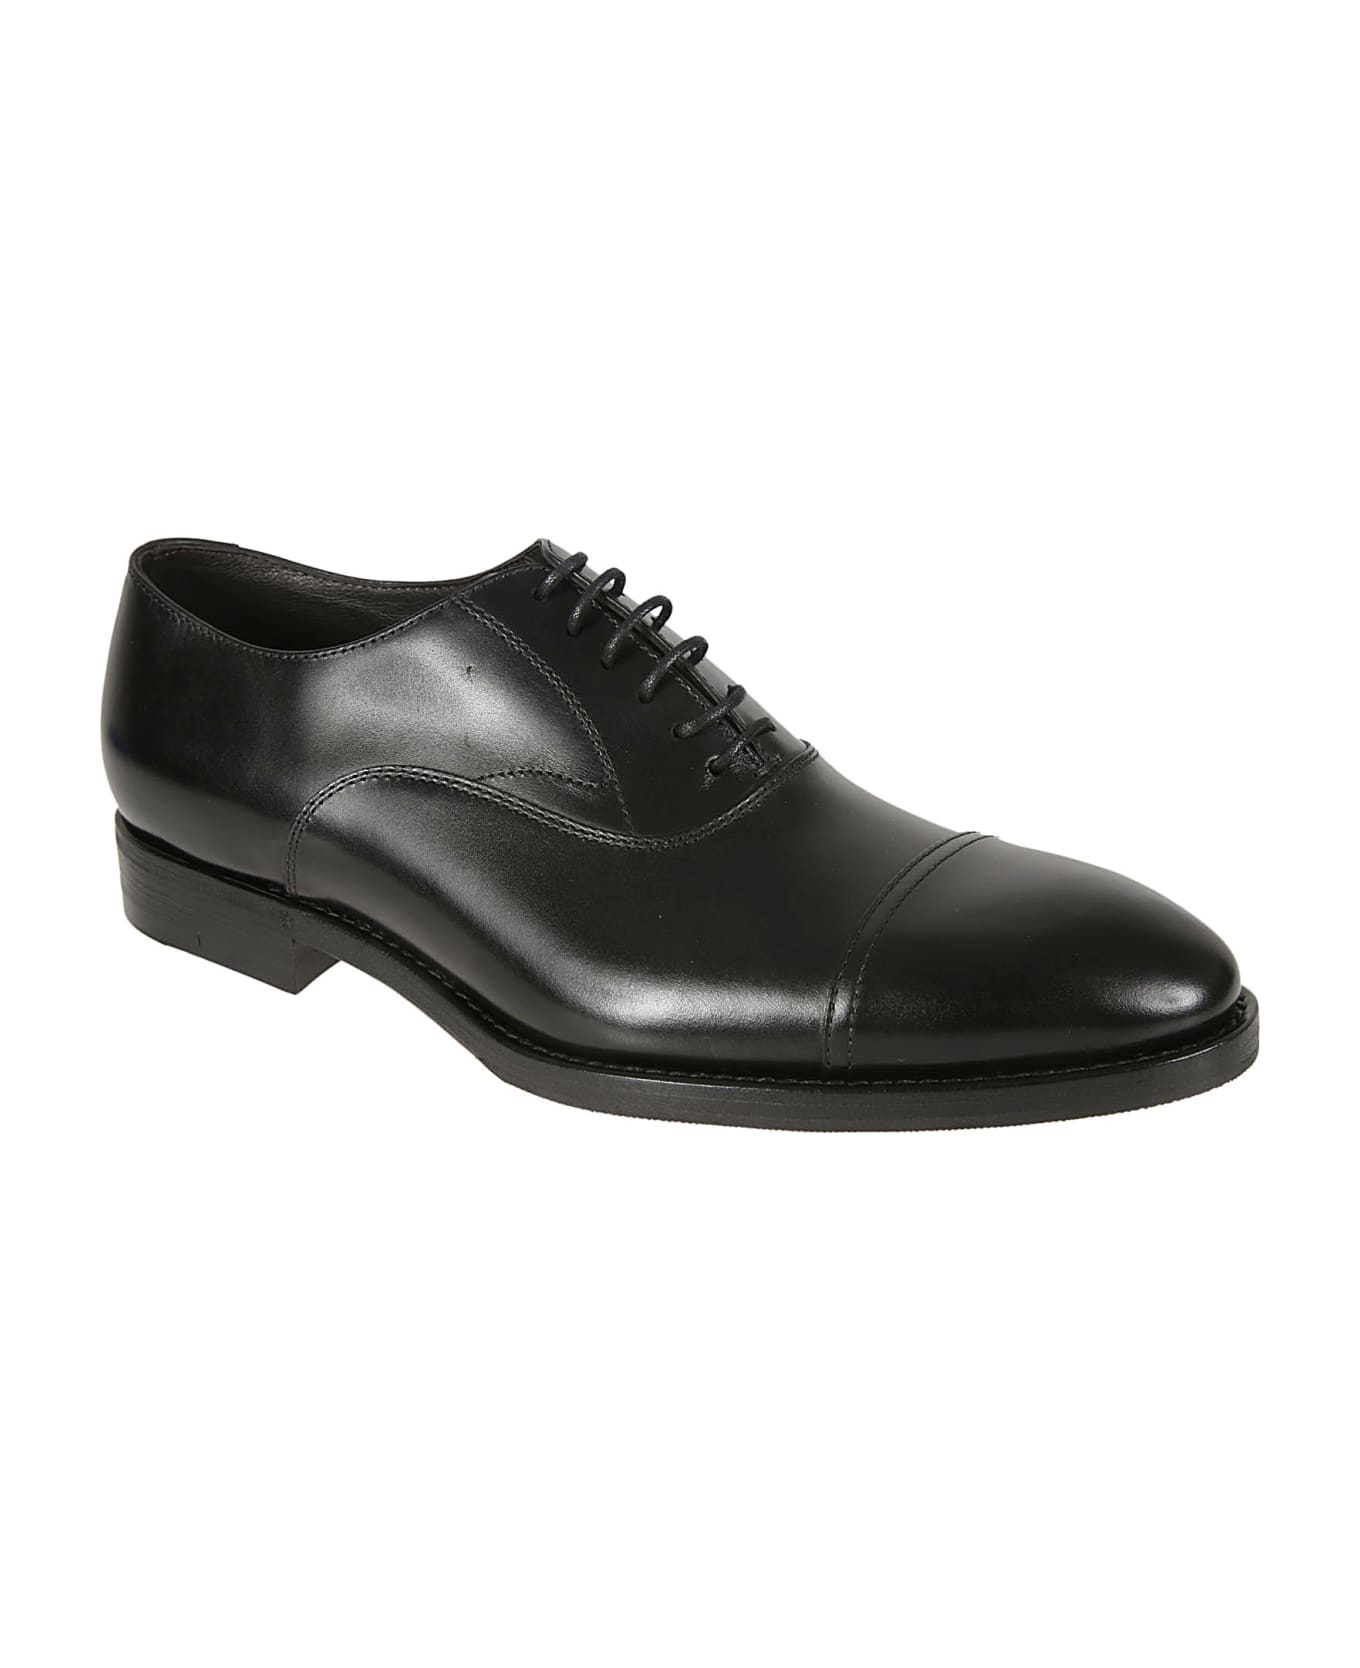 Henderson Baracco Classic Oxford Shoes - Black